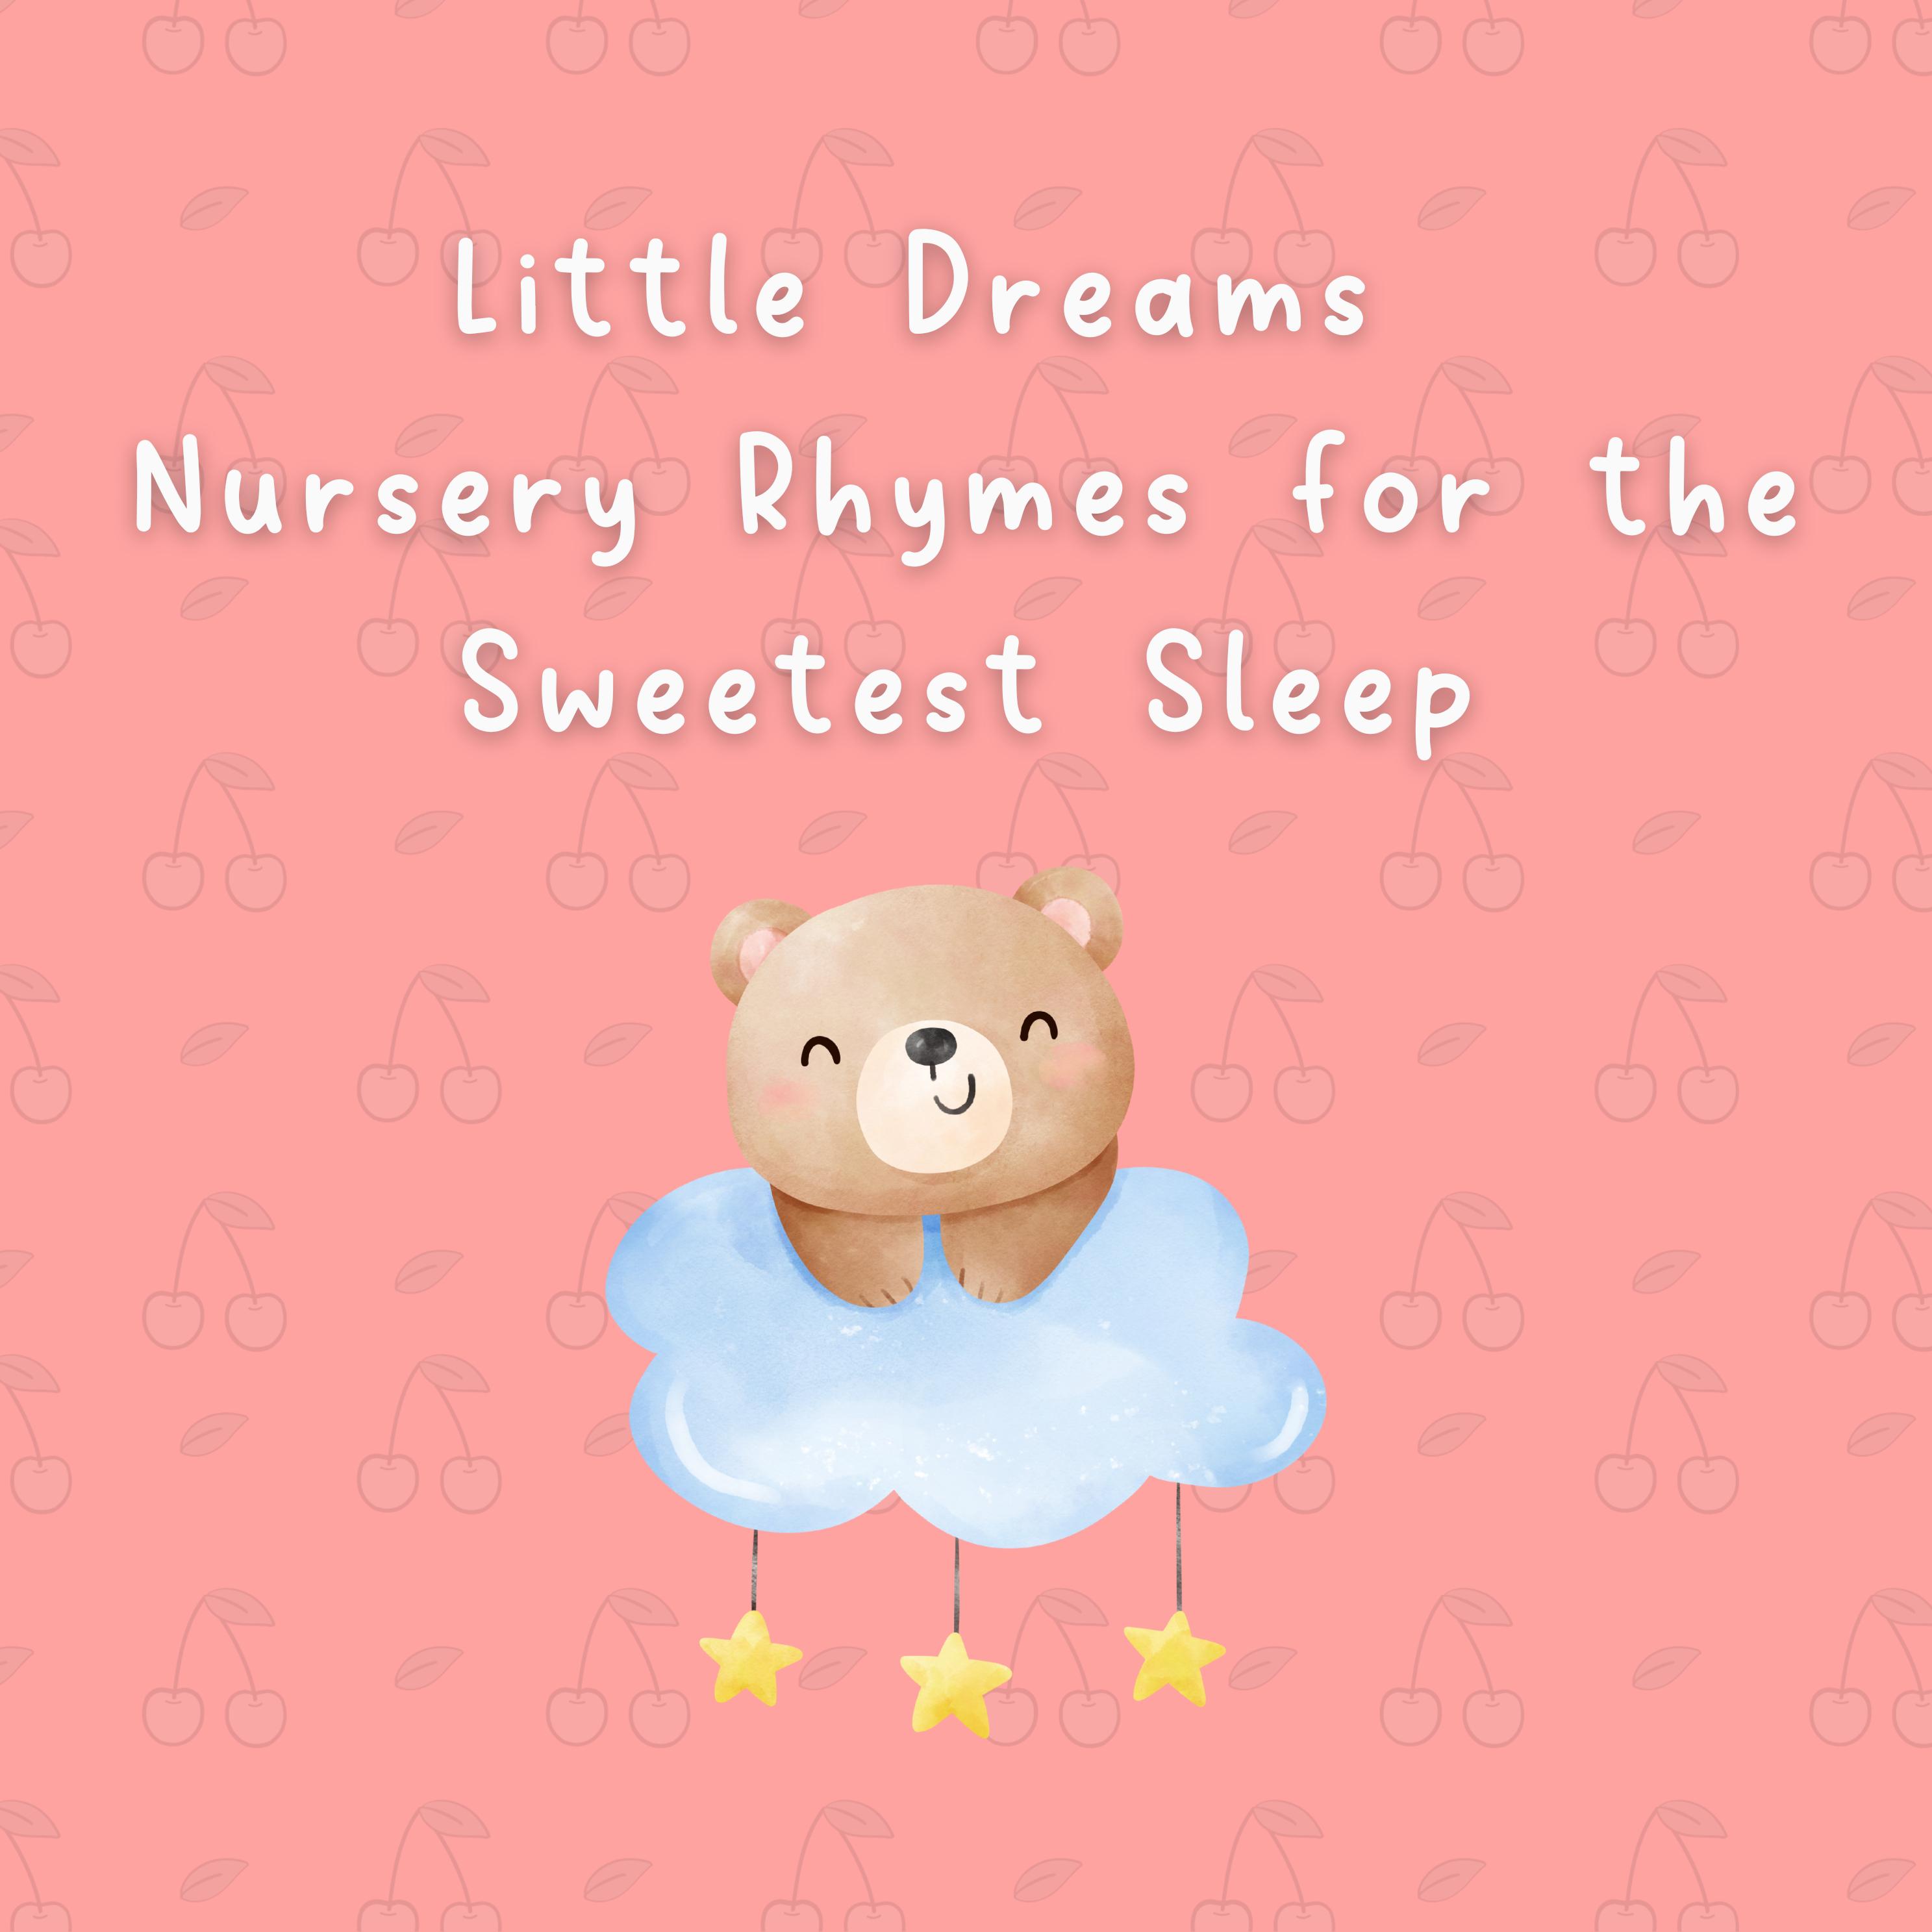 Baby Nap Time - The Rustling Reed's Rhapsody (Nursery Rhymes to Help Baby Sleep)